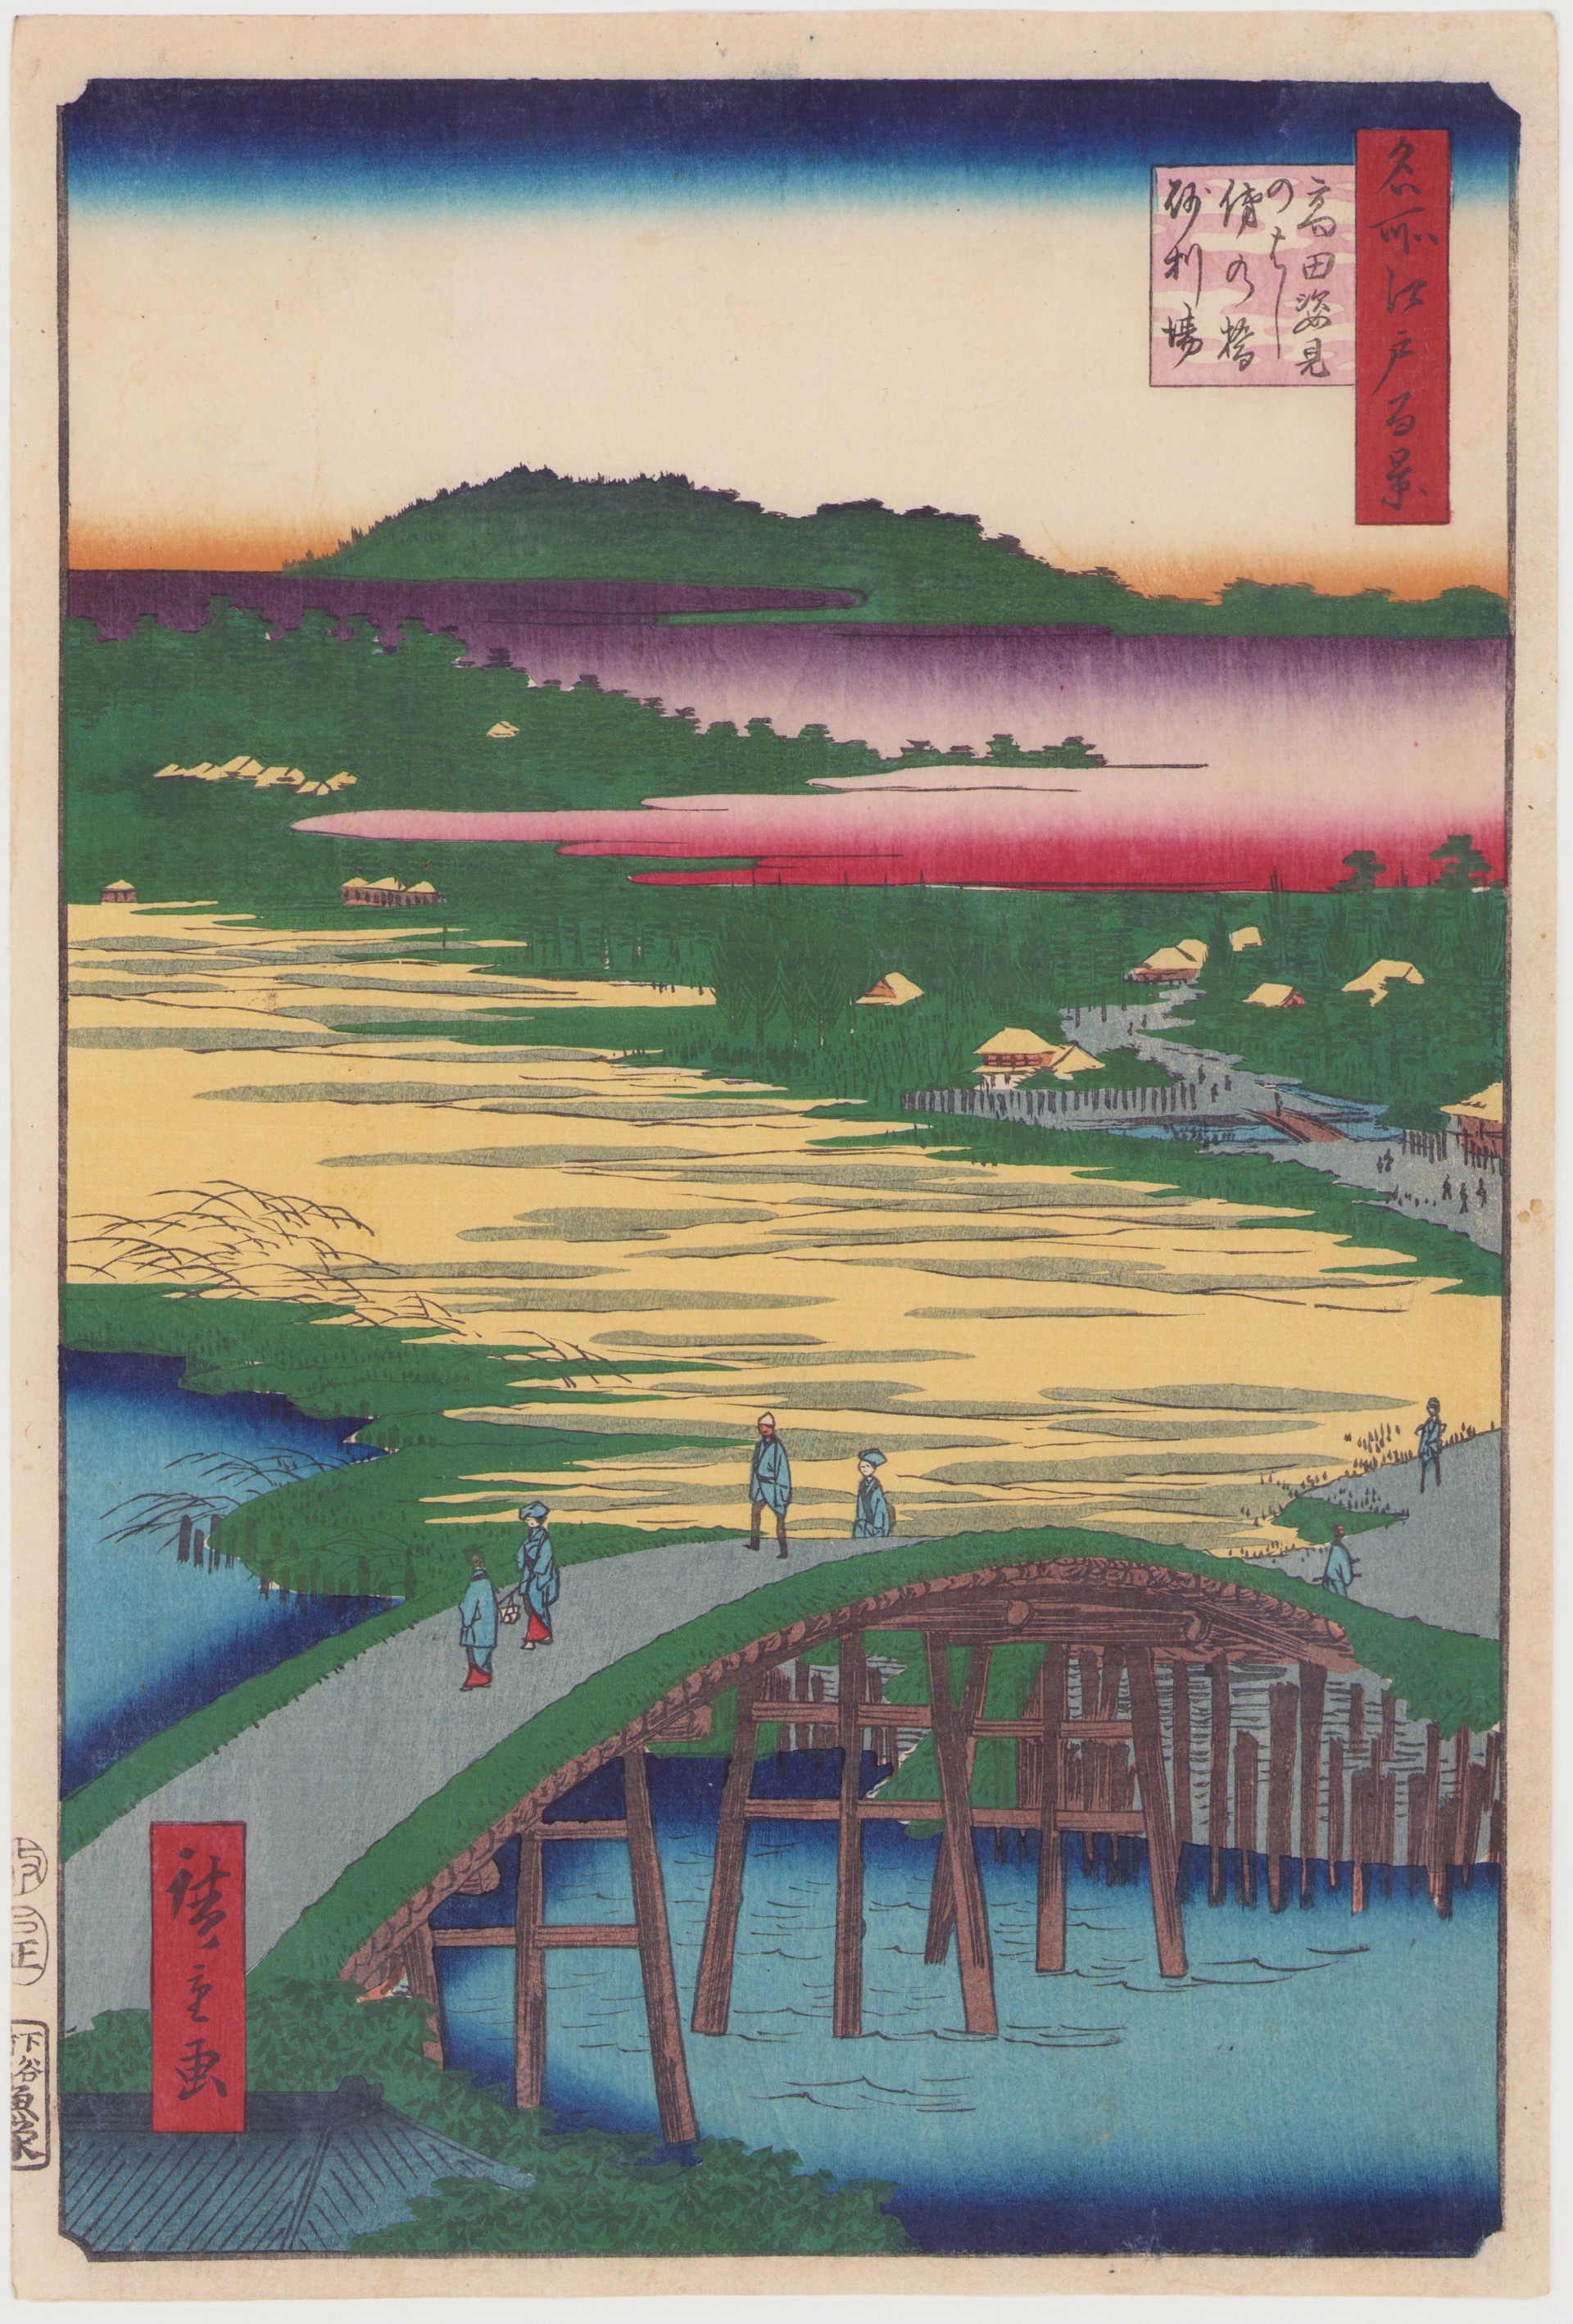 #116 Sugatami Bridge, Omokage Bridge and the Gravel Pits at Takata by Hiroshige